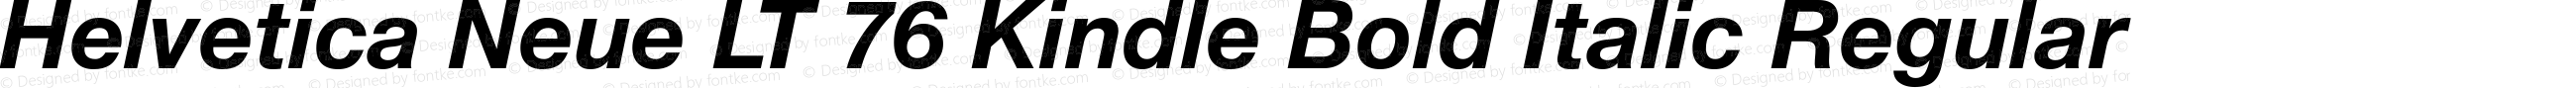 Helvetica Neue LT 76 Kindle Bold Italic